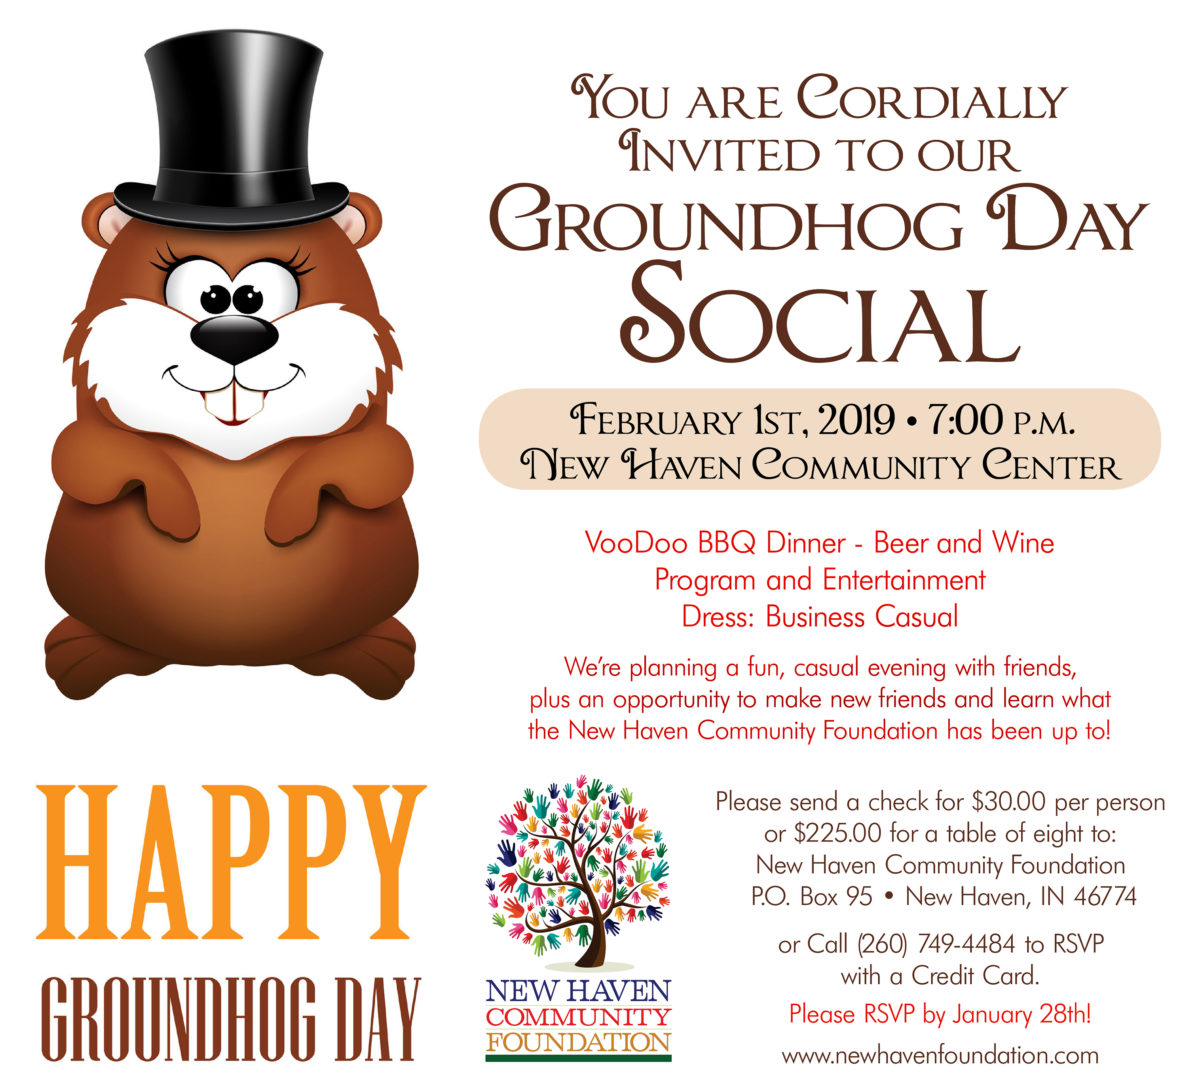 2019 Groundhog Day Social - New Haven Community Foundation